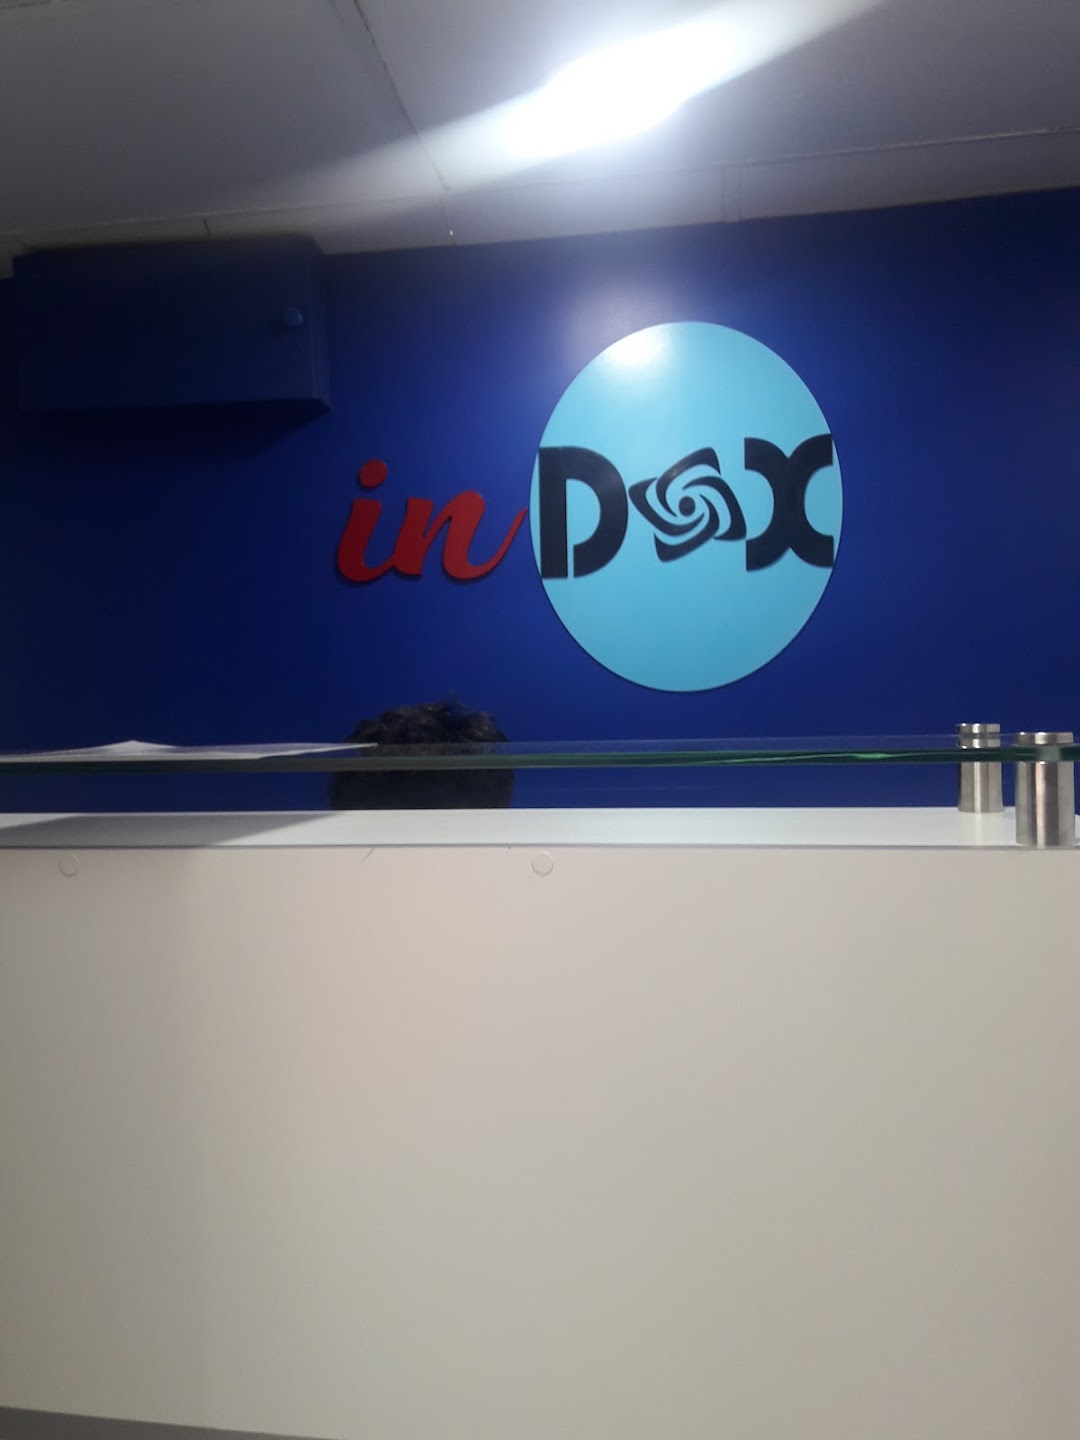 In Dox